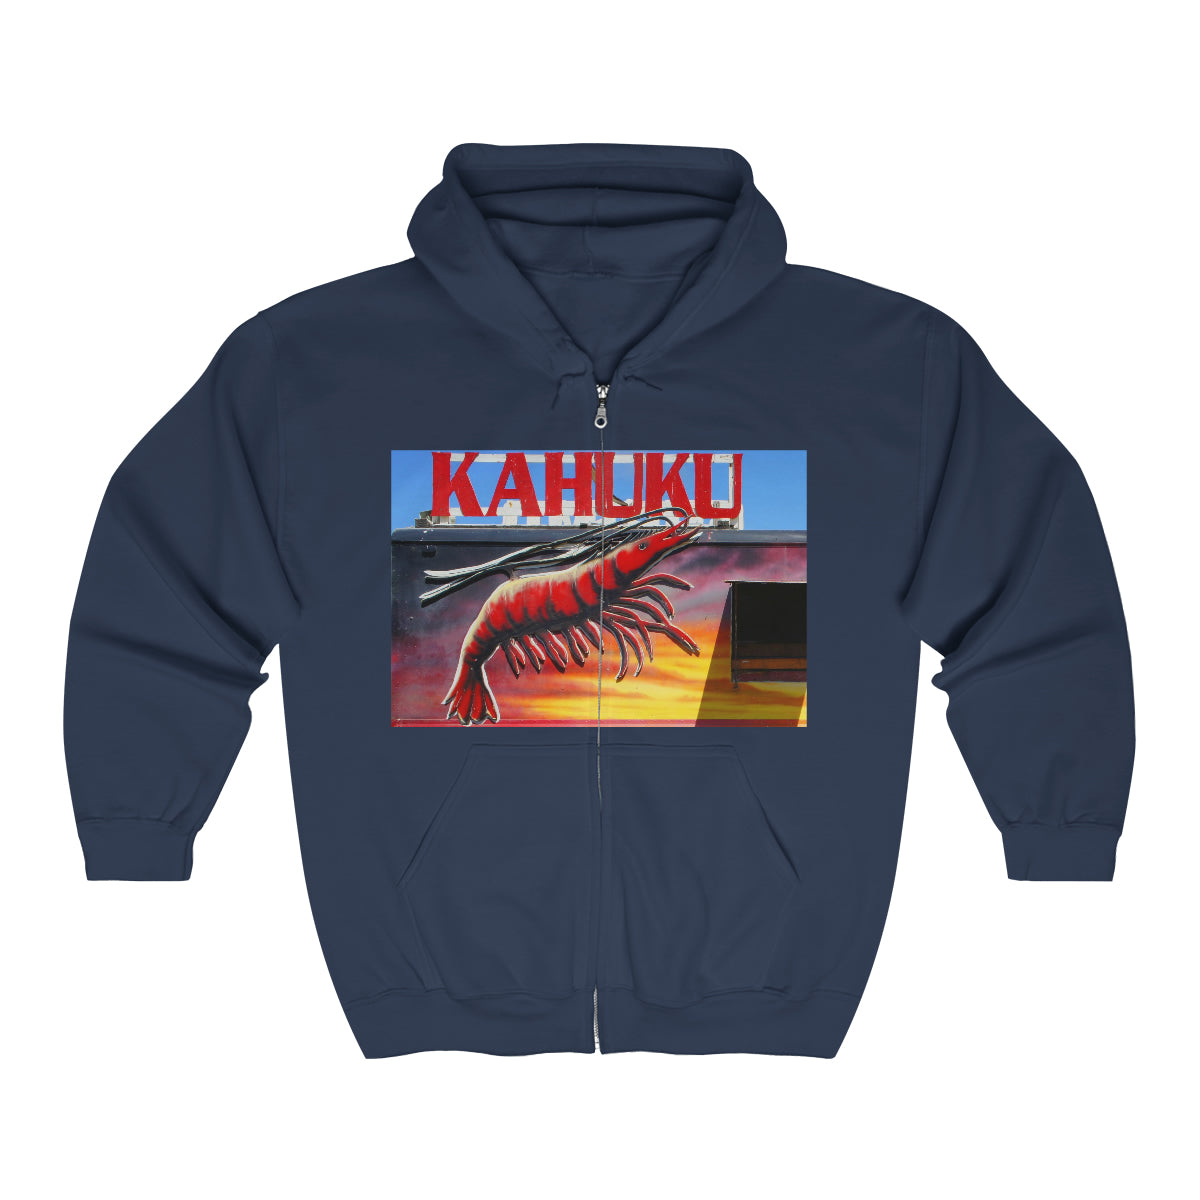 Kahuku Kai - Unisex Heavy Blend Full Zip Hooded Sweatshirt - Fry1Productions